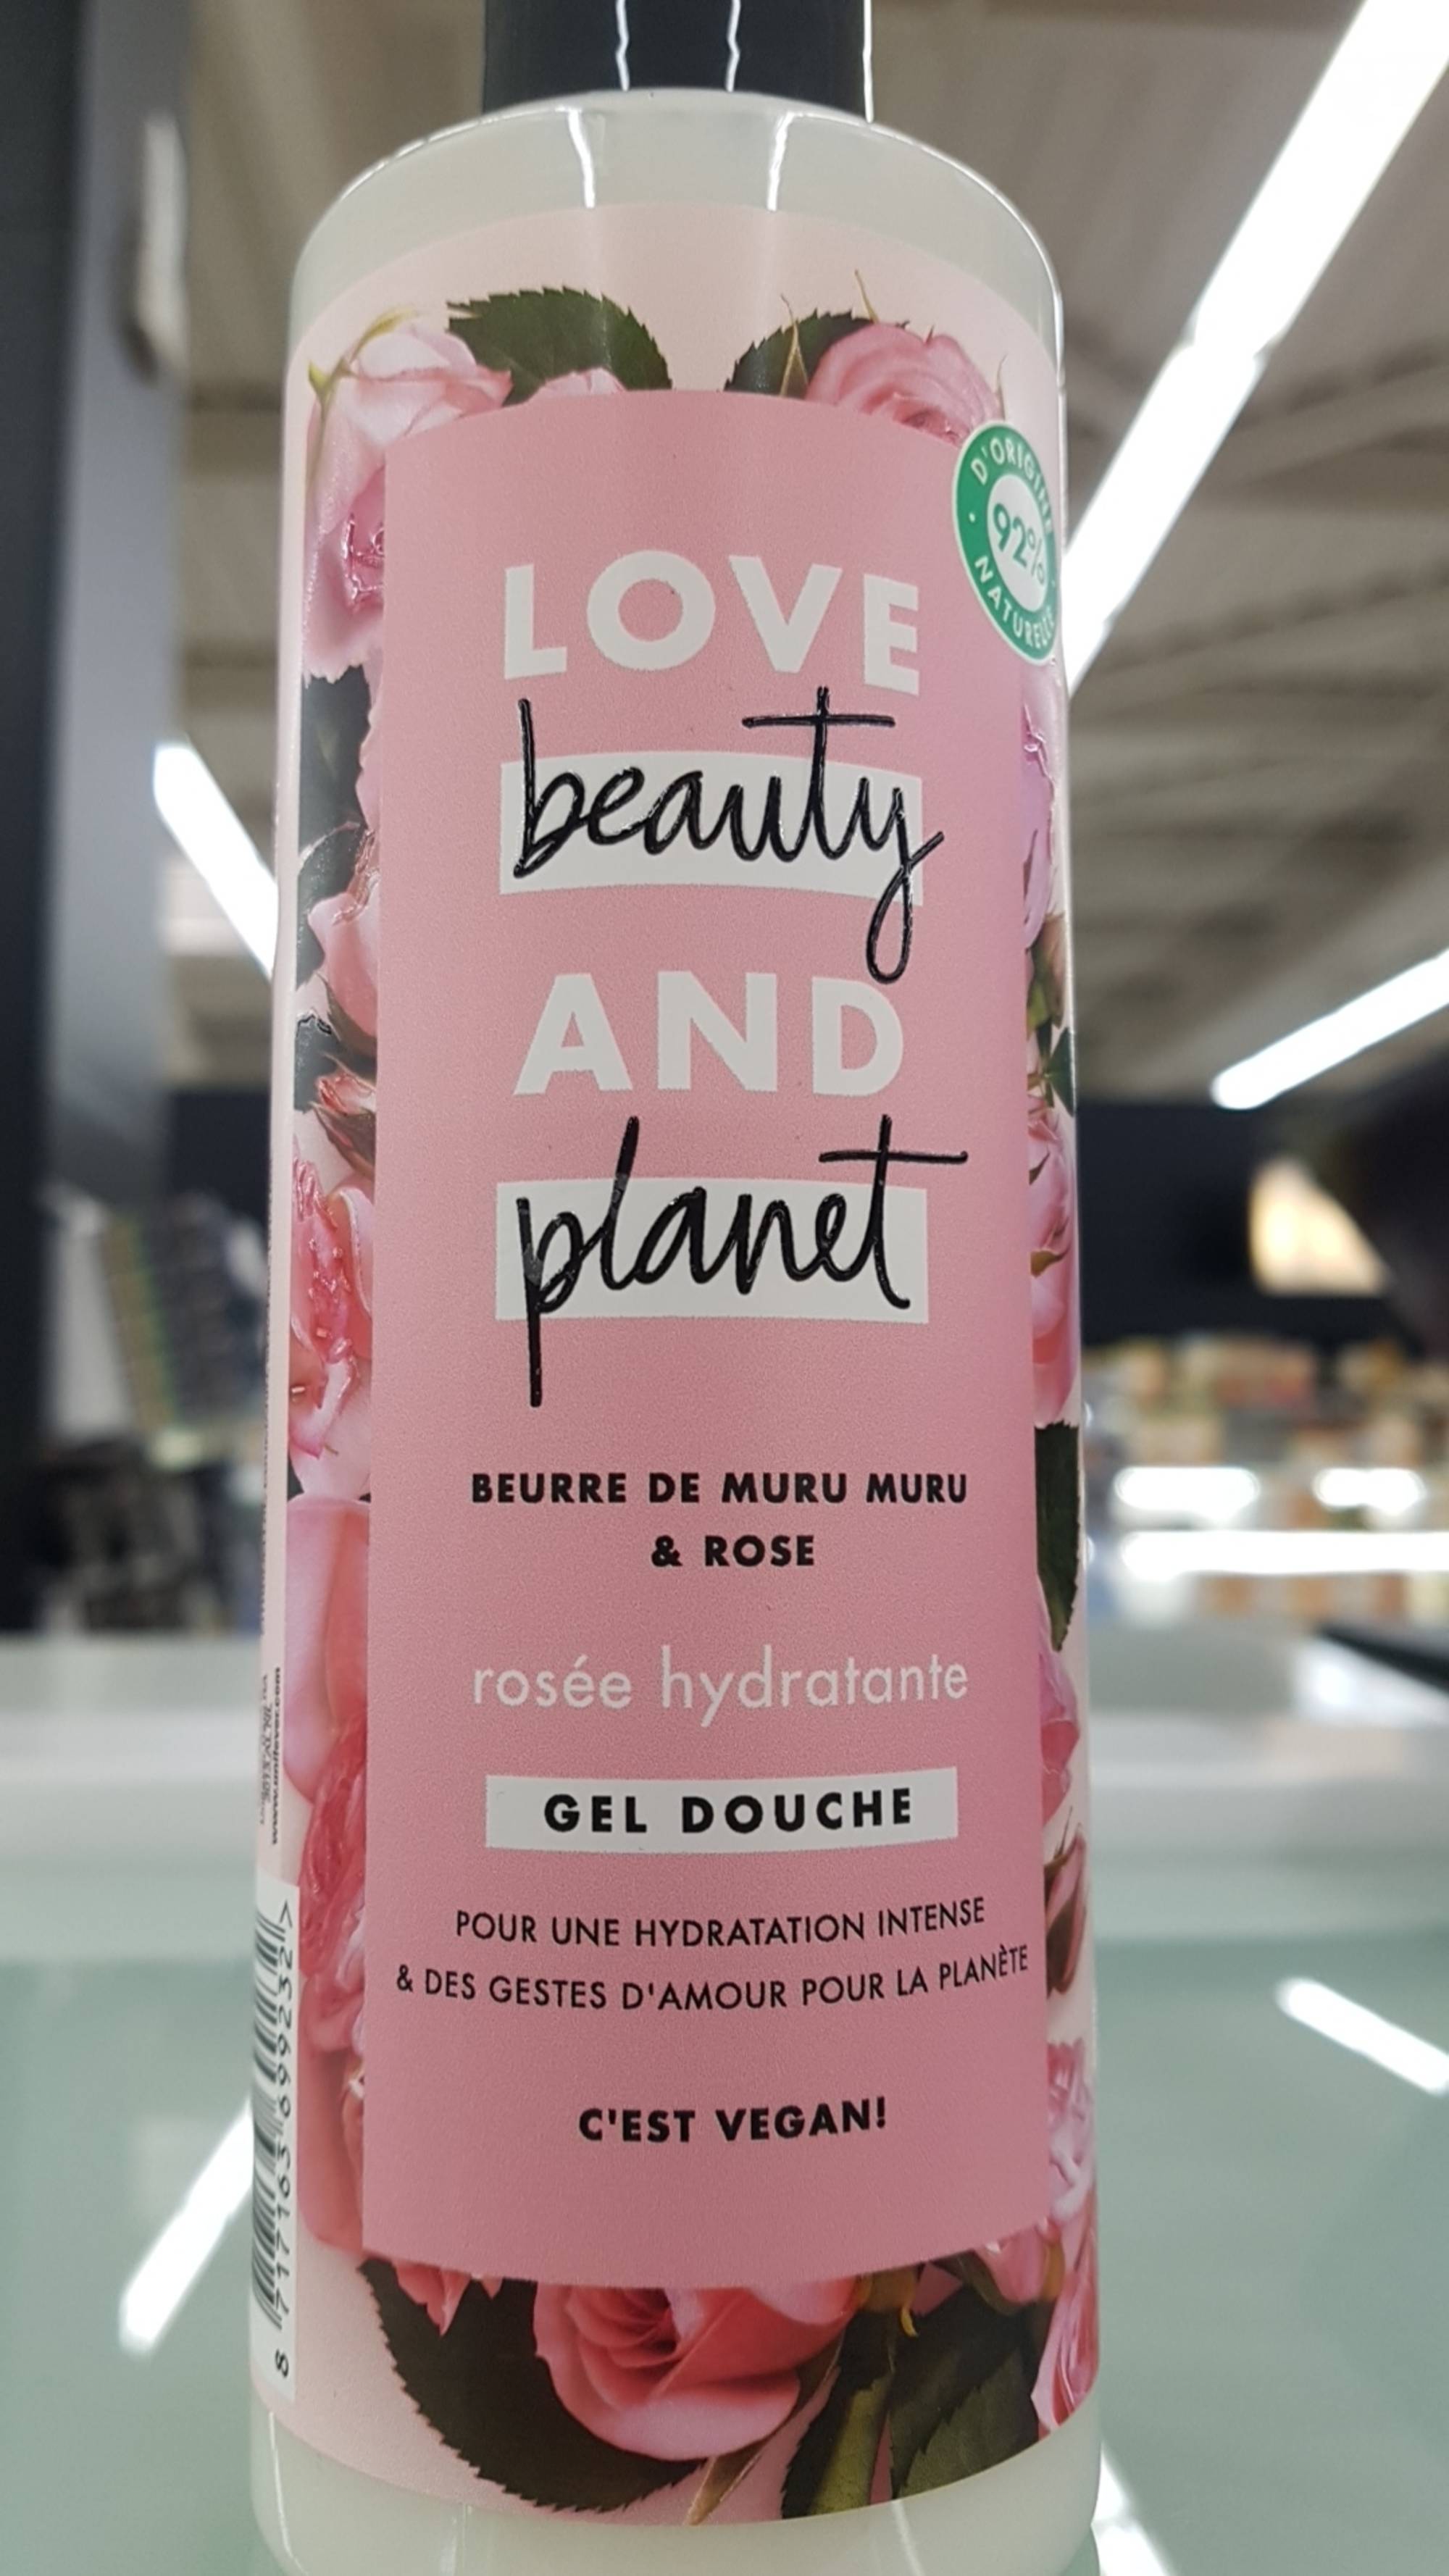 LOVE BEAUTY AND PLANET - Rosée hydratante - Gel douche beurre de muru muru & rose